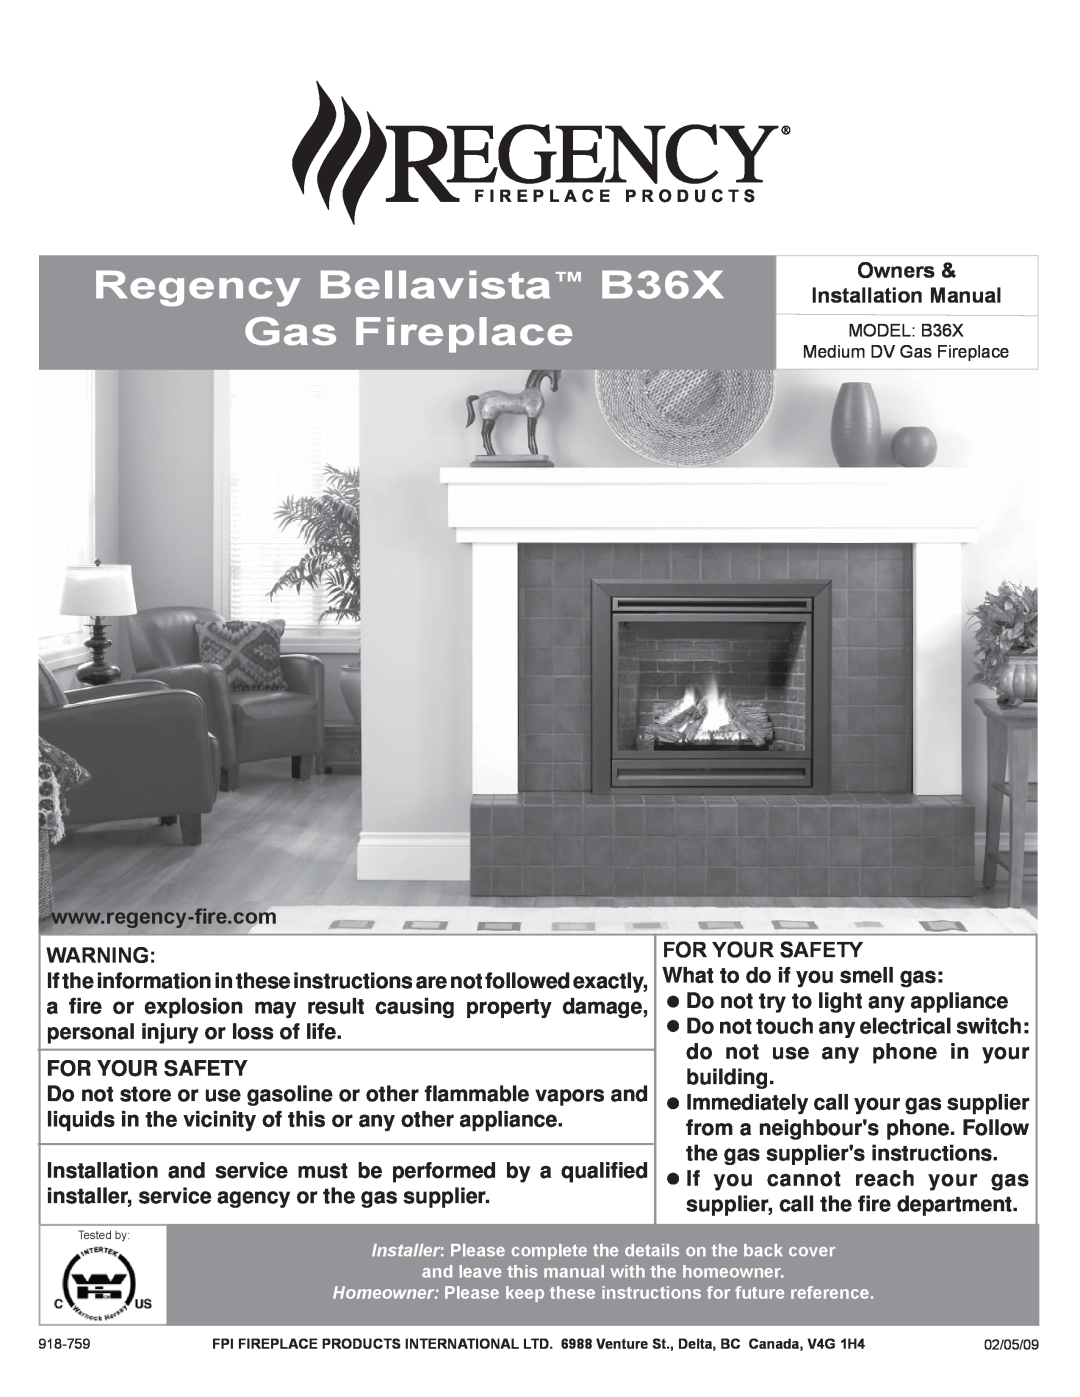 Regency installation manual Regency Bellavista B36X Gas Fireplace, Owners & Installation Manual, 918-759 